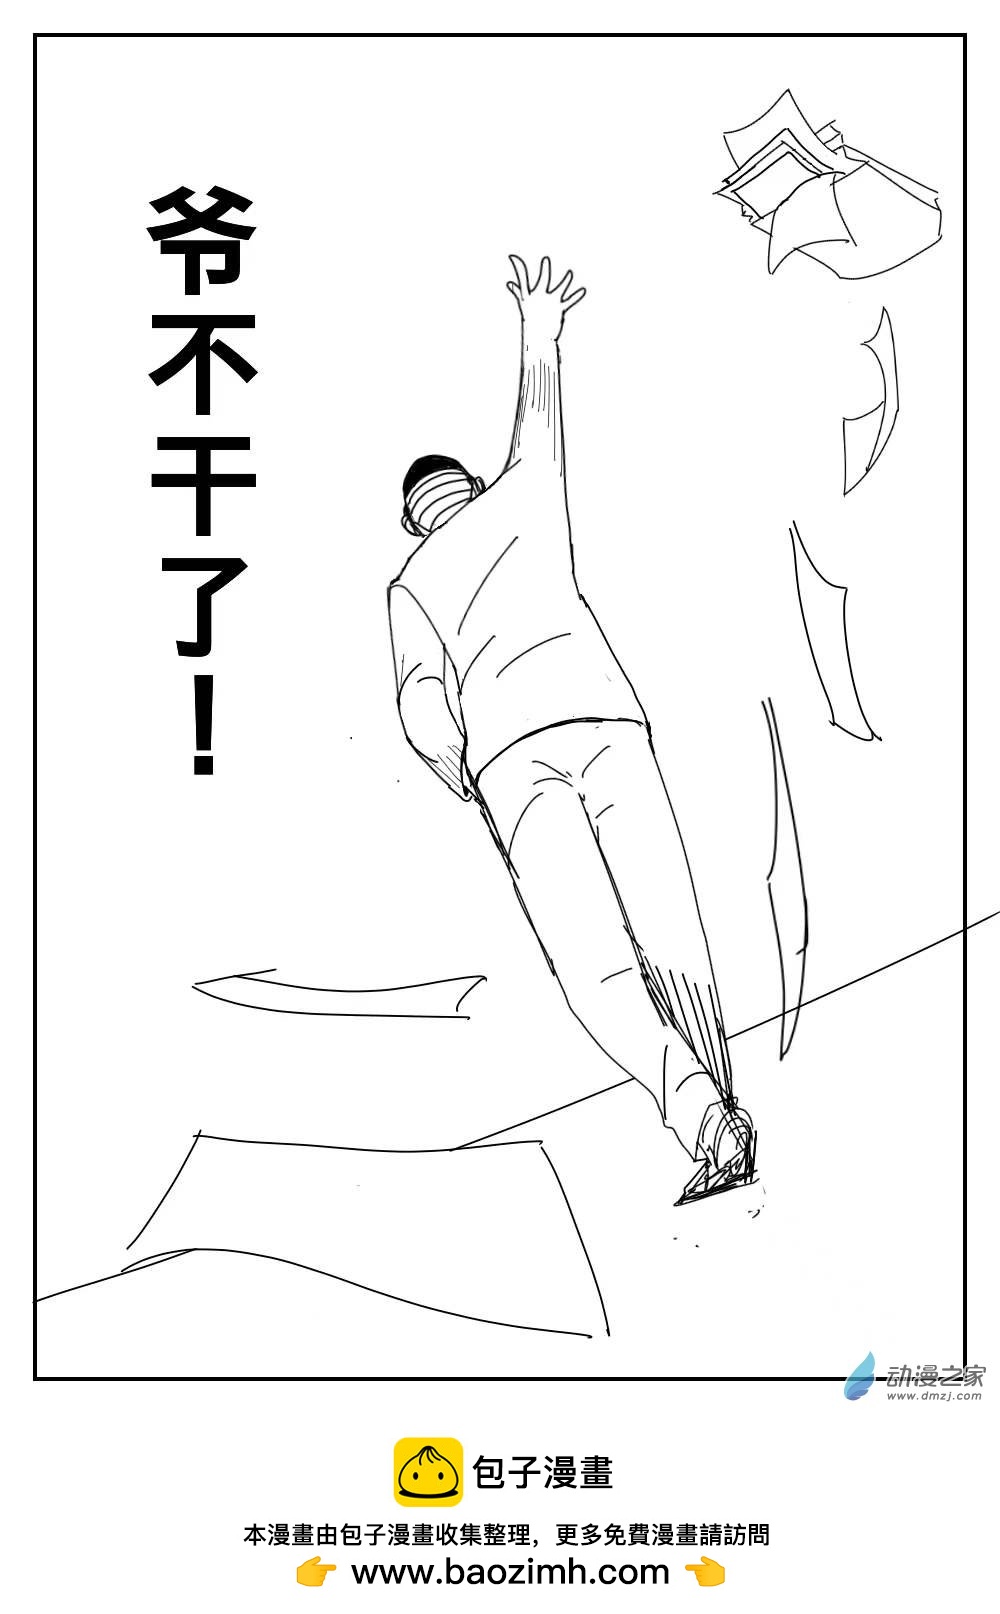 K神的短篇漫畫集 - 01 臥底阿潮 - 3